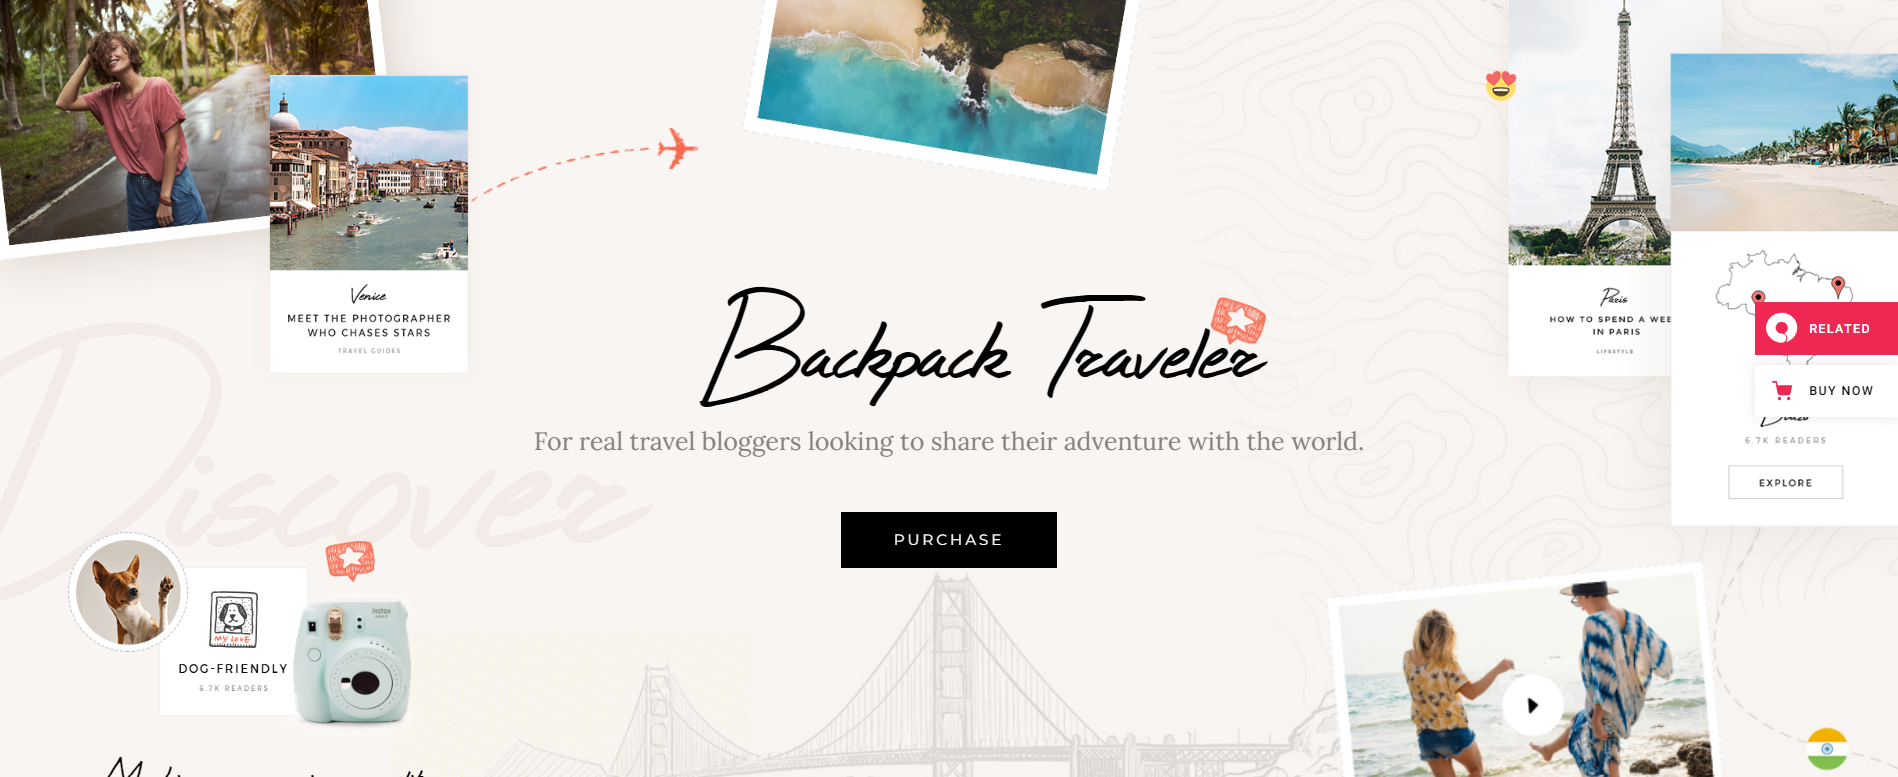 backpack traveler niche and nice wordpress theme for travelers